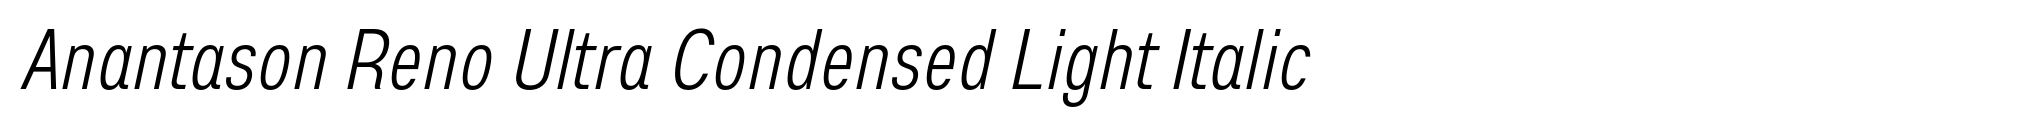 Anantason Reno Ultra Condensed Light Italic image